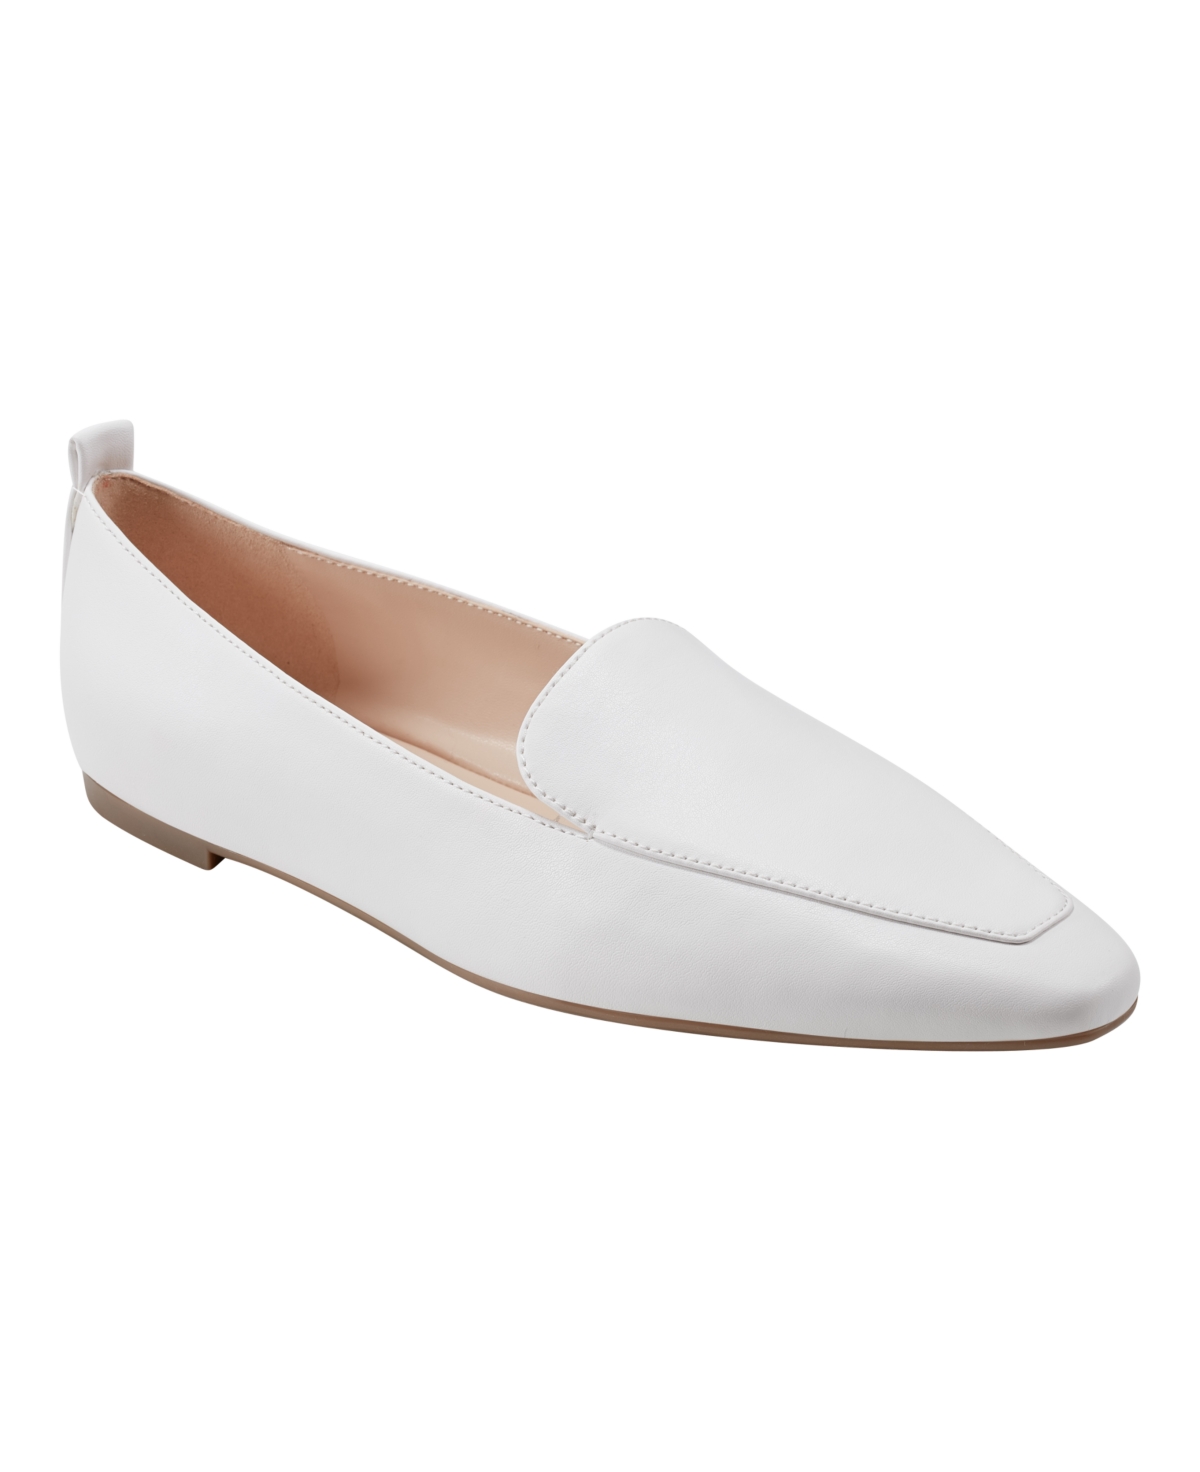 Women's Seltra Almond Toe Slip-On Dress Flat Loafers - Light Natural Raffia- Manmade